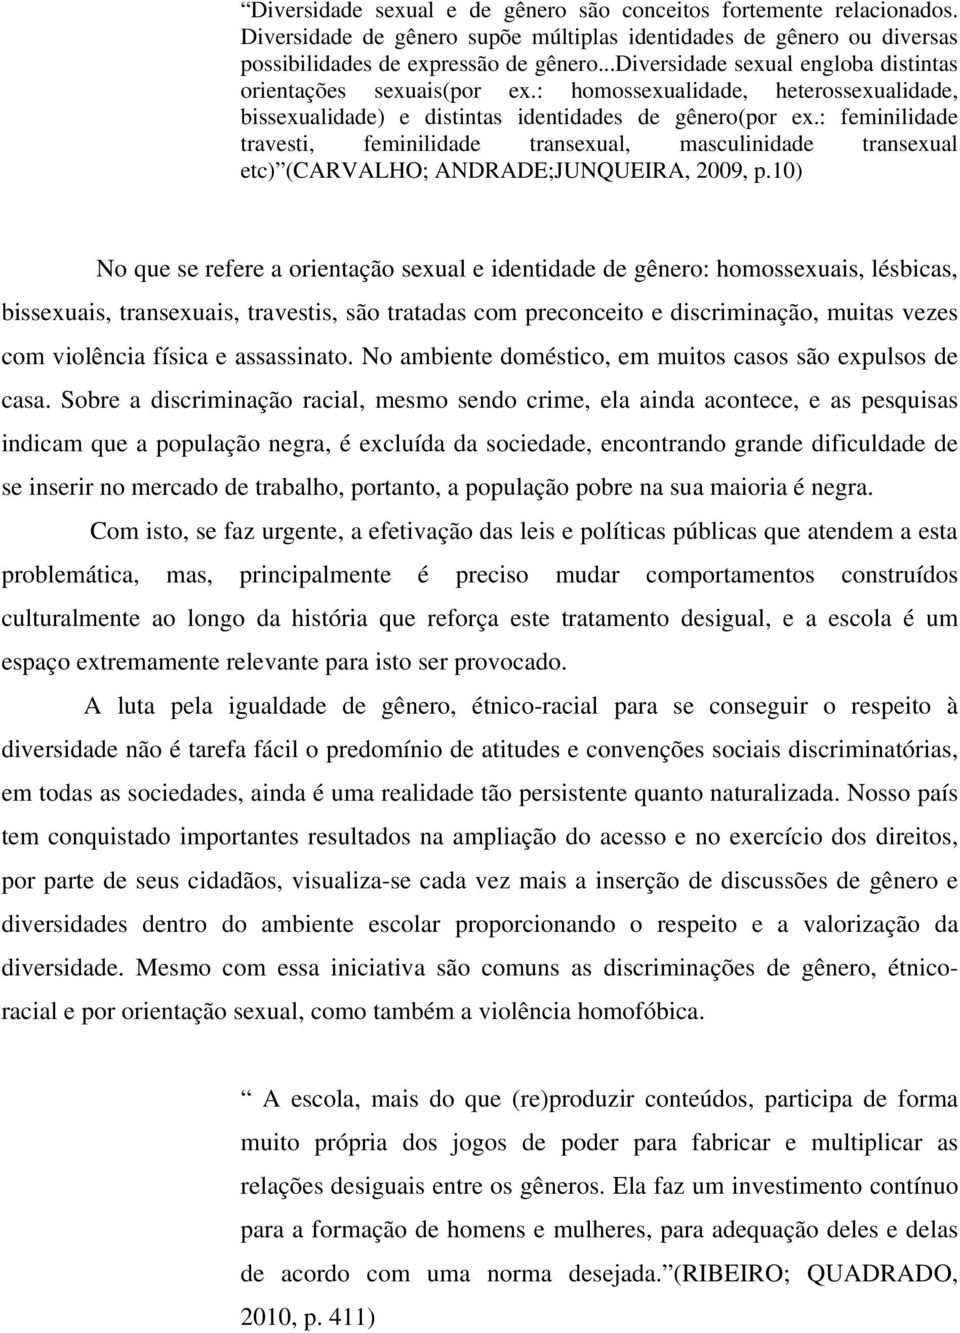 : feminilidade travesti, feminilidade transexual, masculinidade transexual etc) (CARVALHO; ANDRADE;JUNQUEIRA, 2009, p.